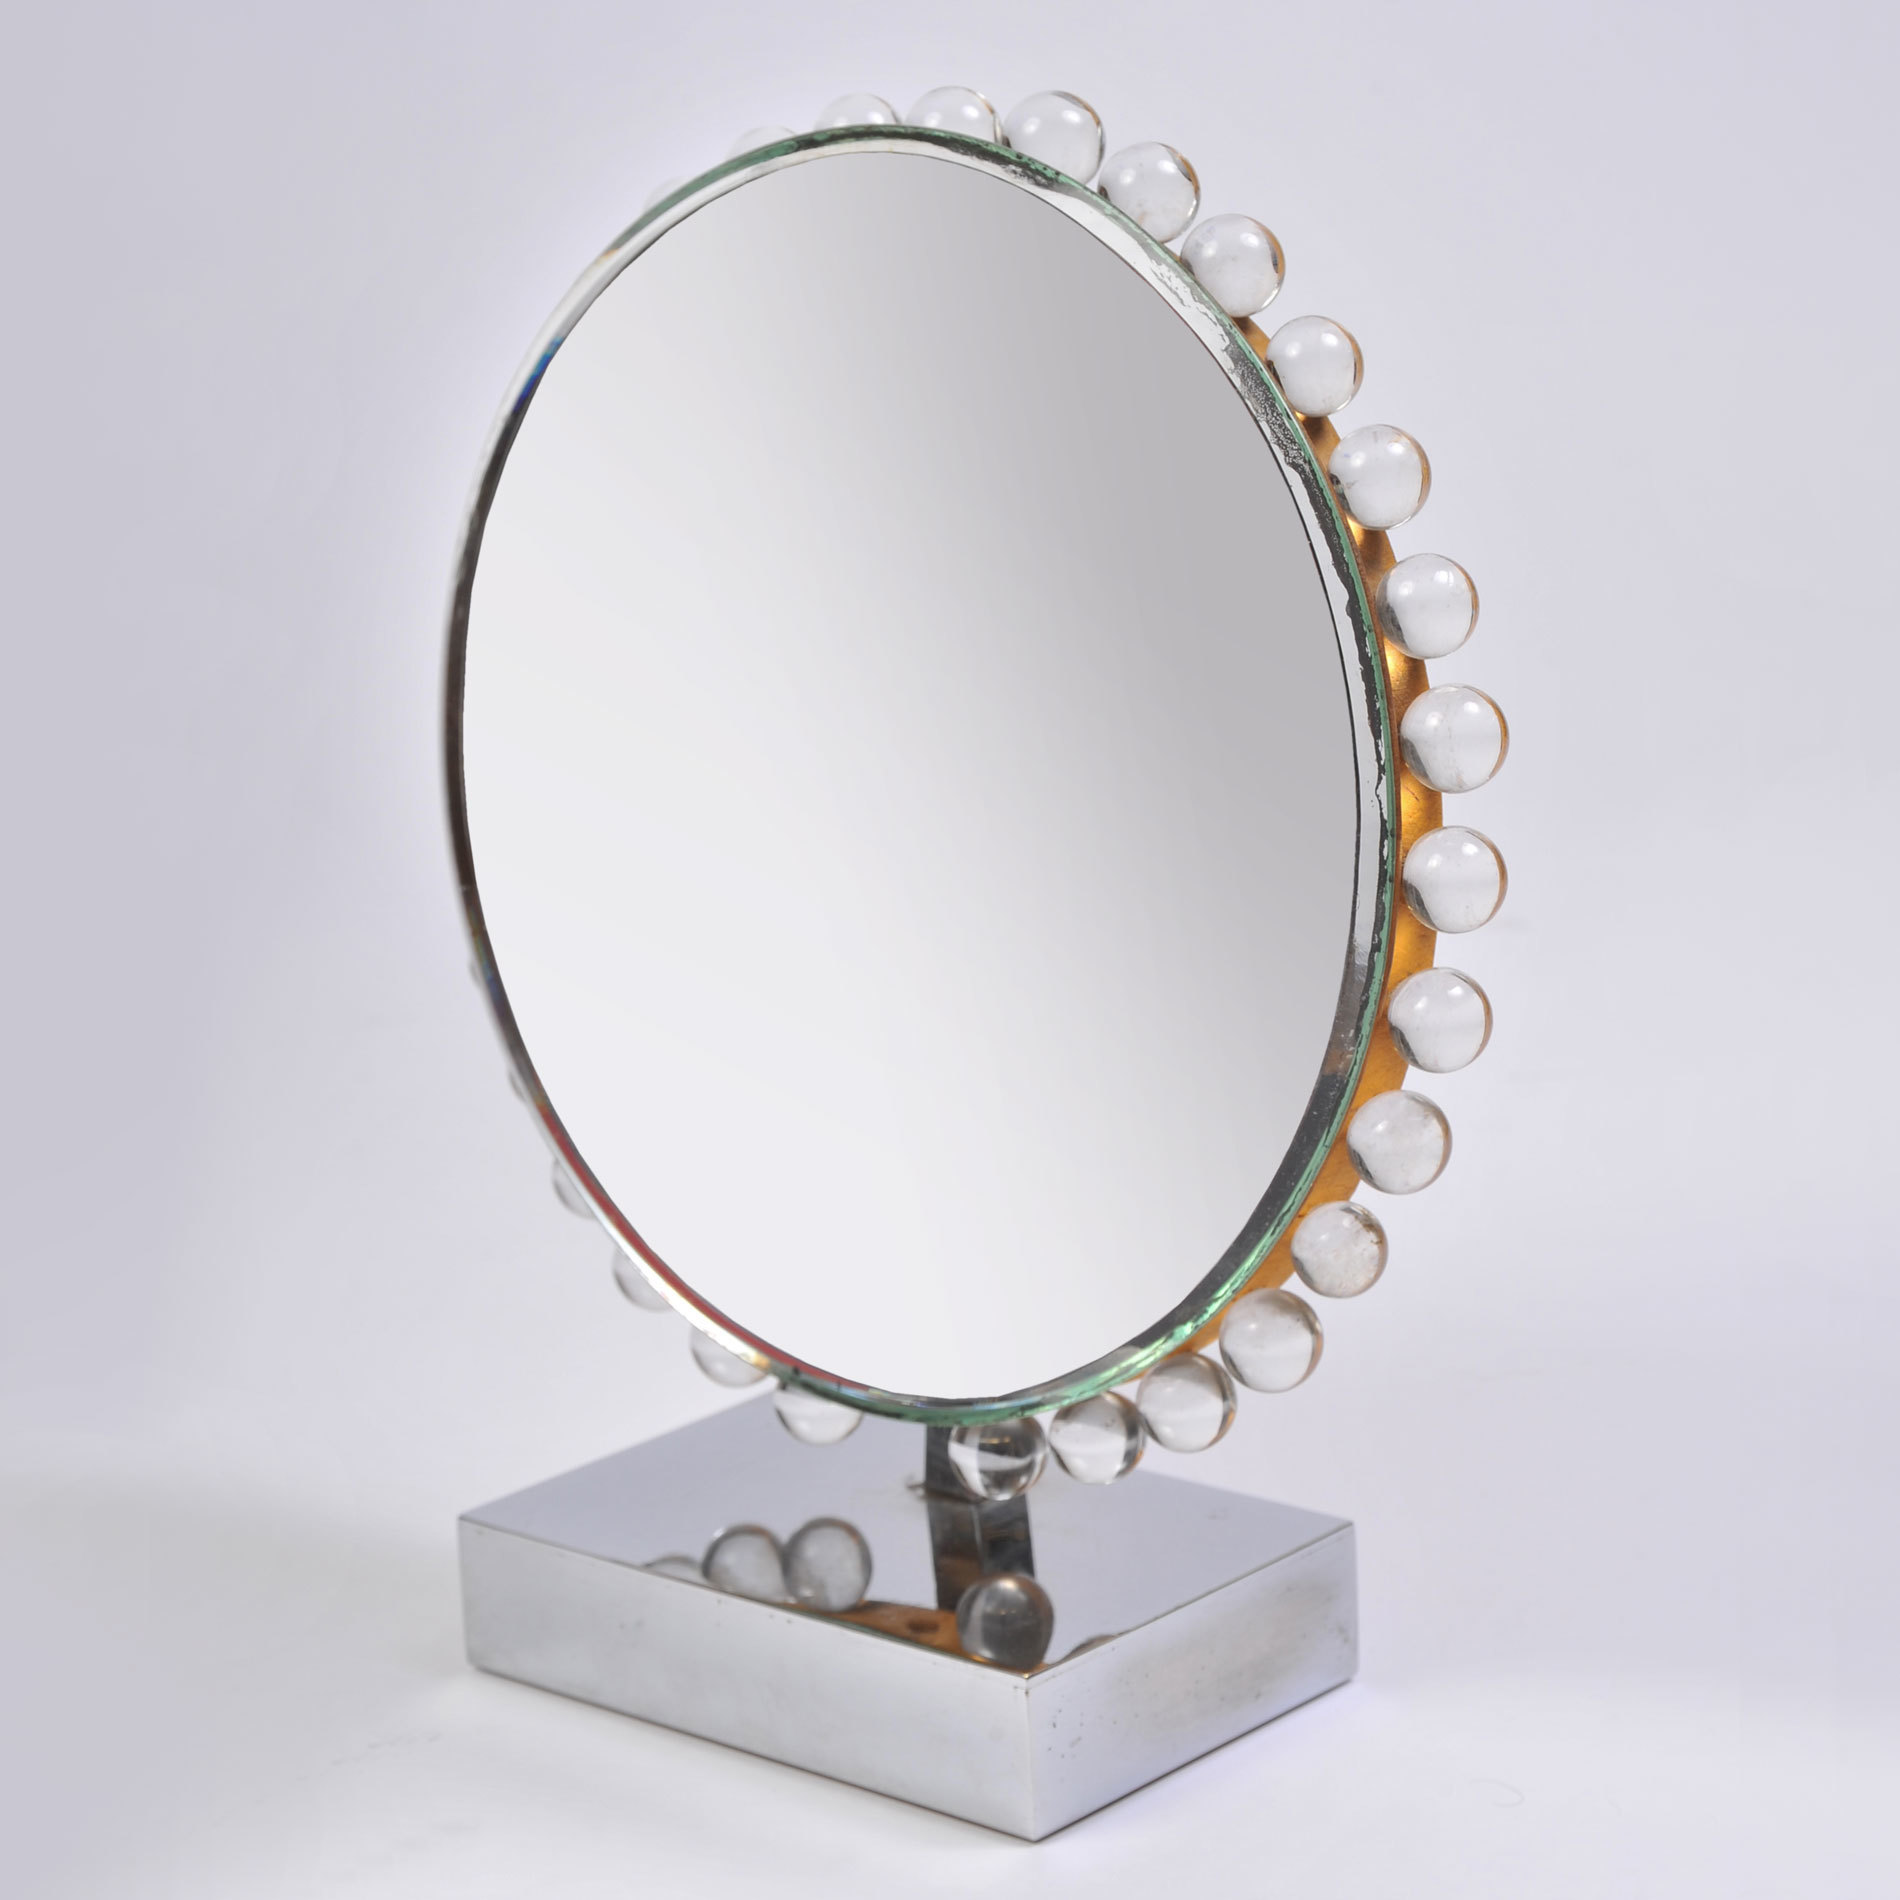 The image for Circular Ball Mirror 02